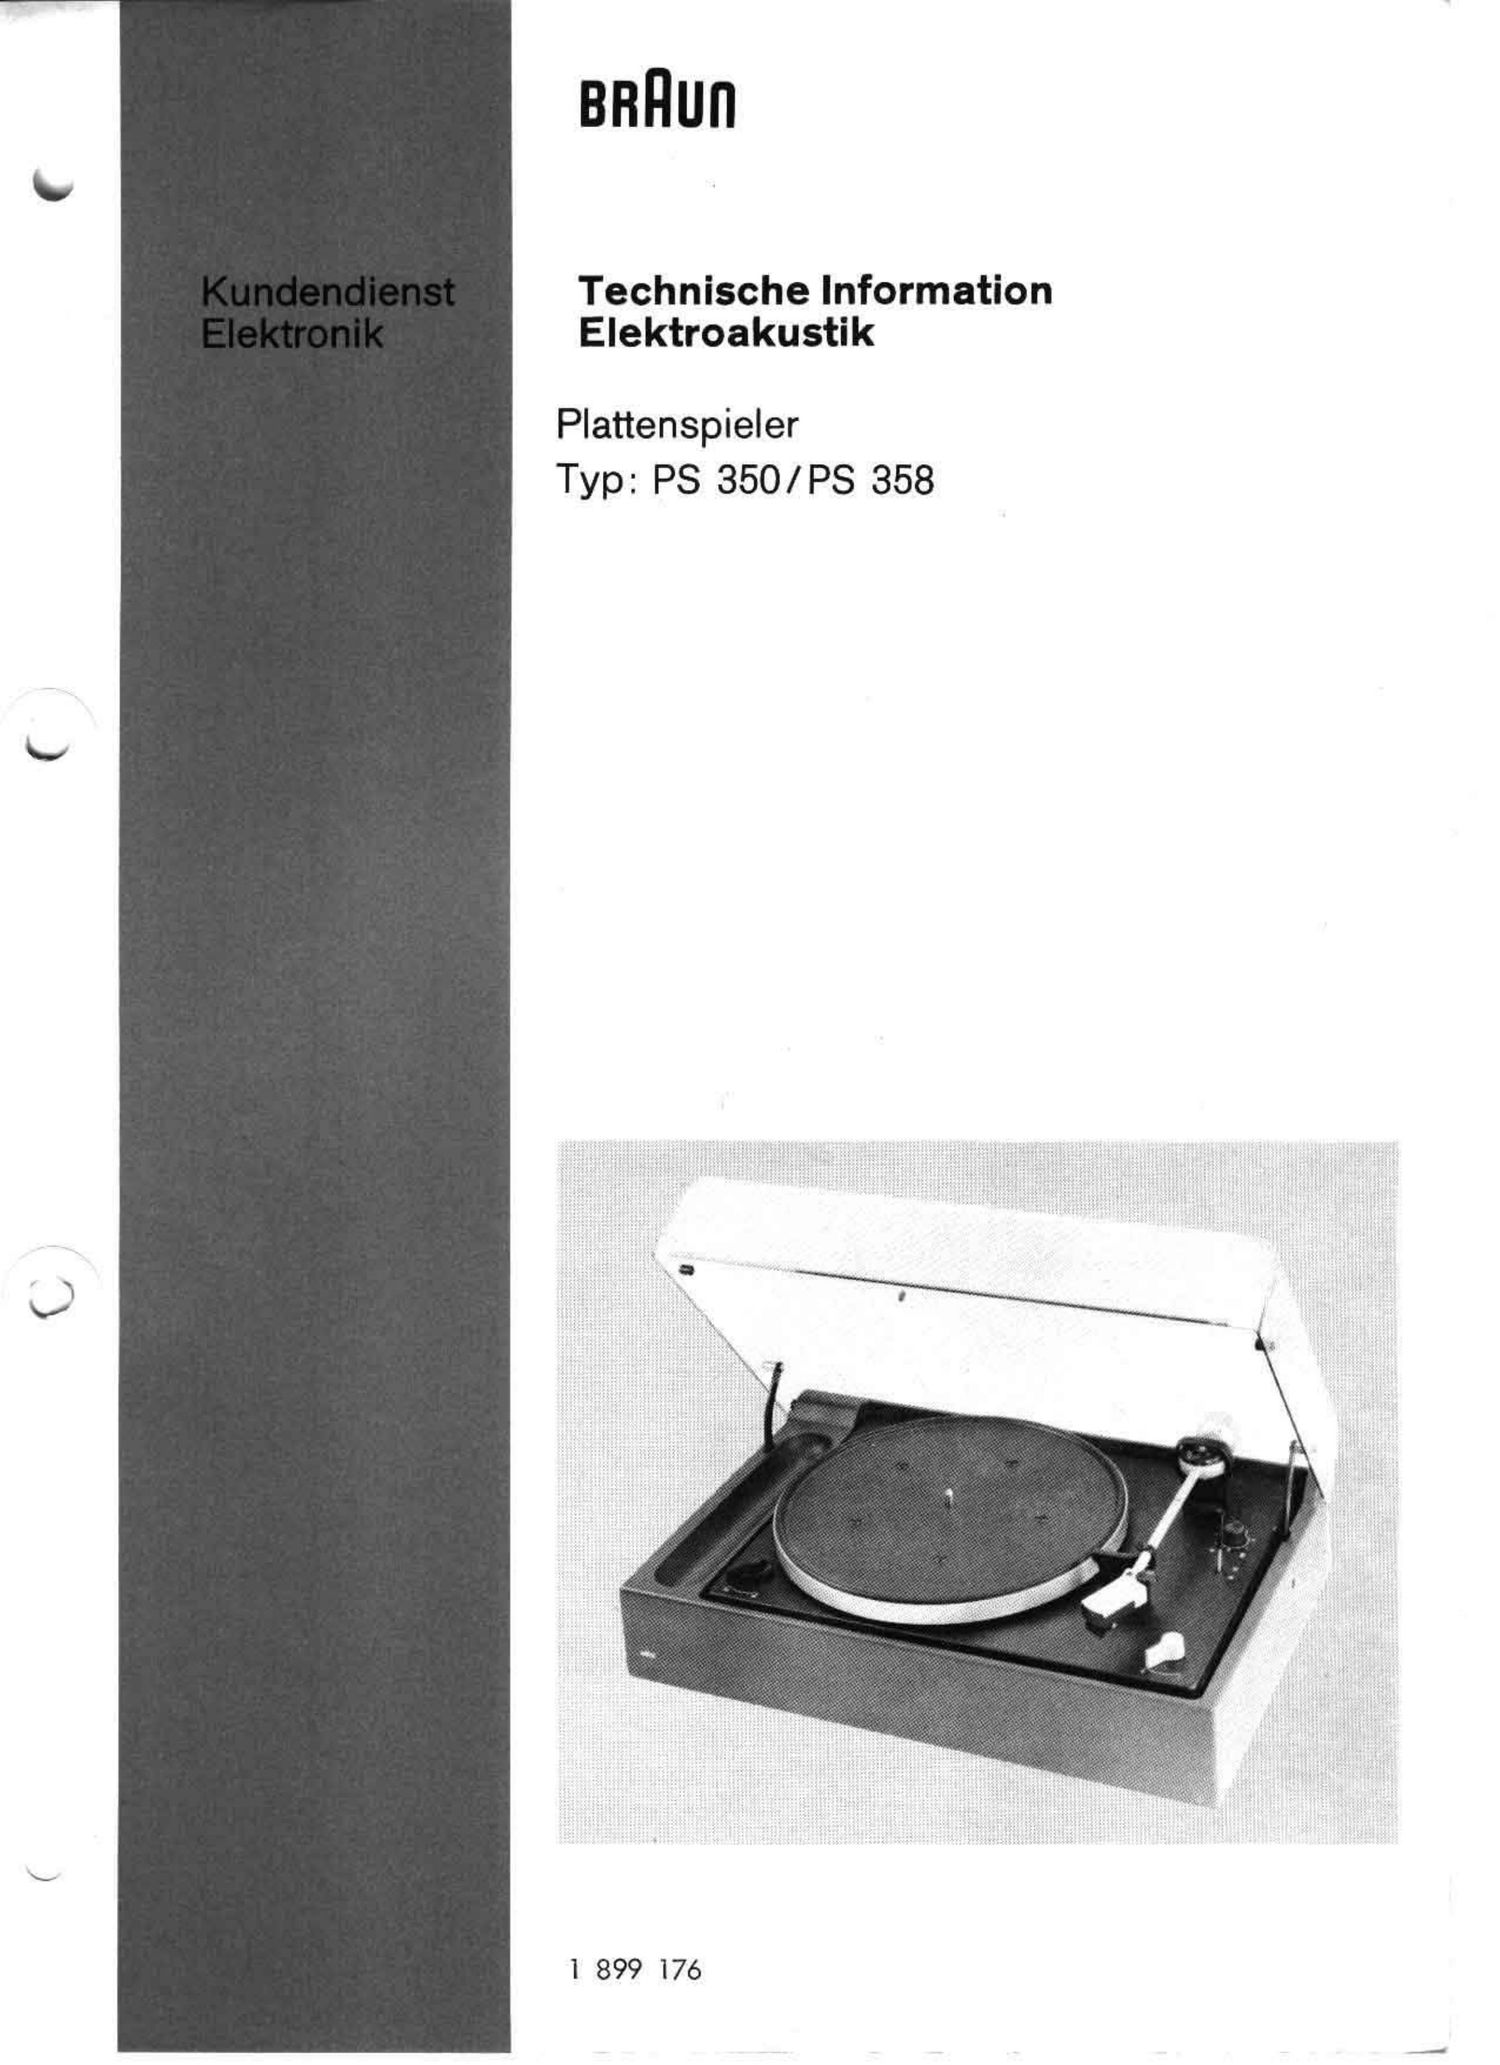 Service Manual-Anleitung für Braun PS 410/P 410 